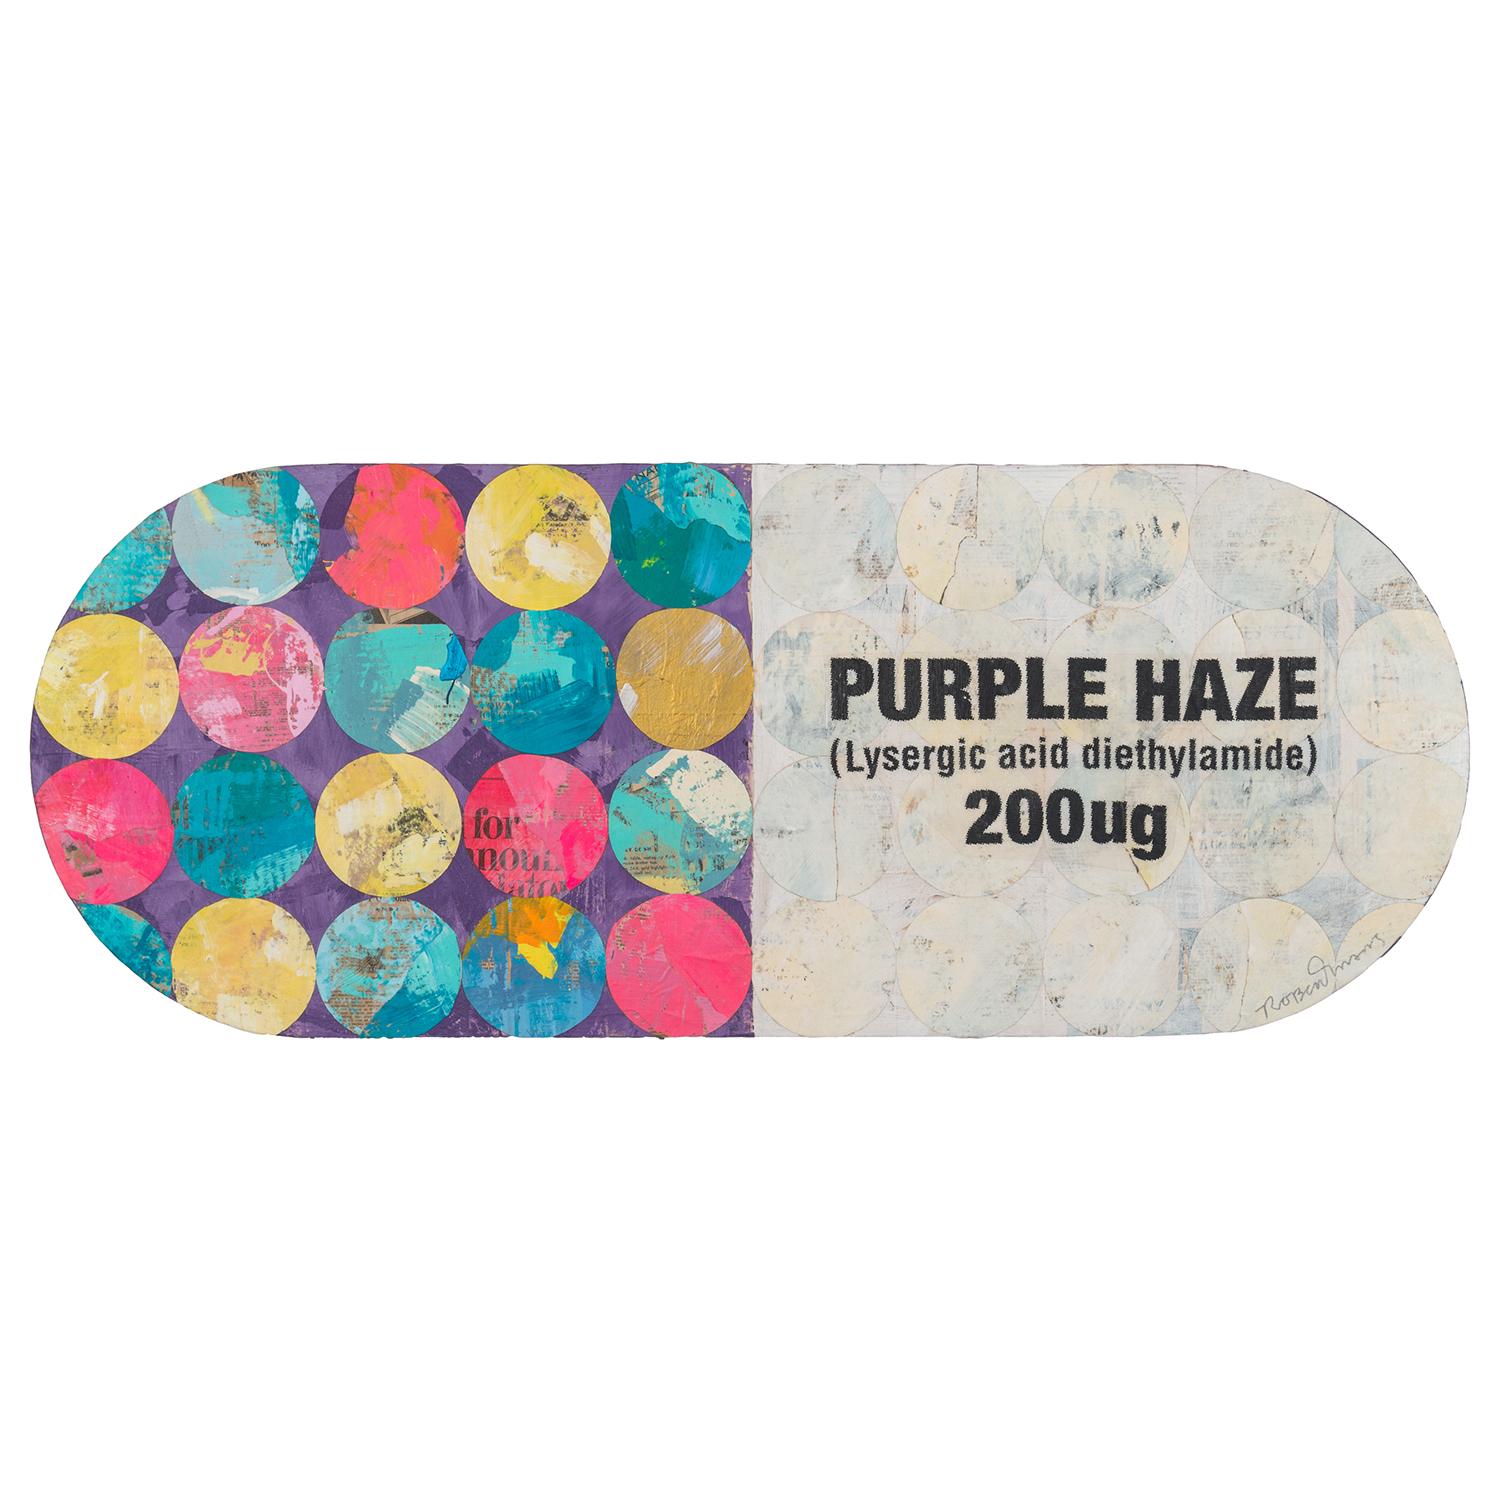 Purple Haze (as sung by Jimi Hendrix) - Mixed Media Art by Robert Mars